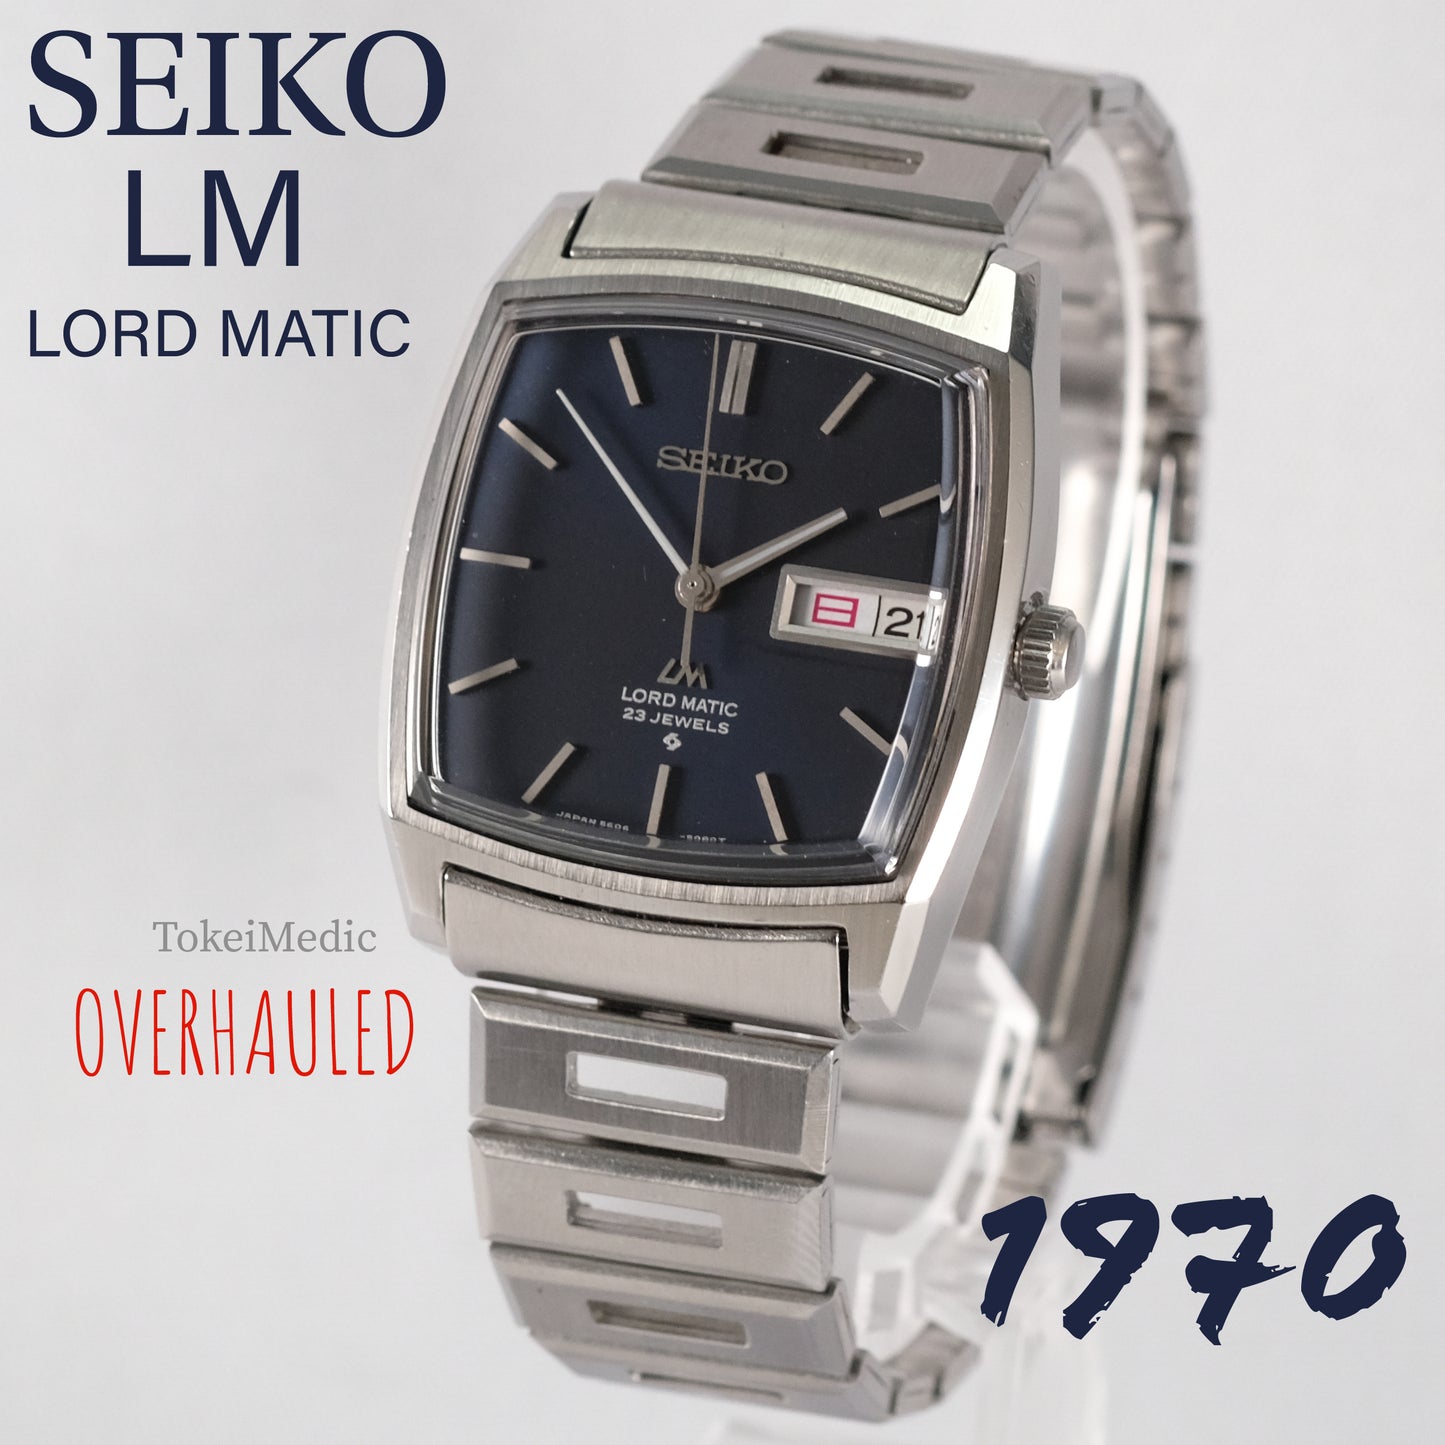 1970 Seiko LM Lord Matic 5606-5000